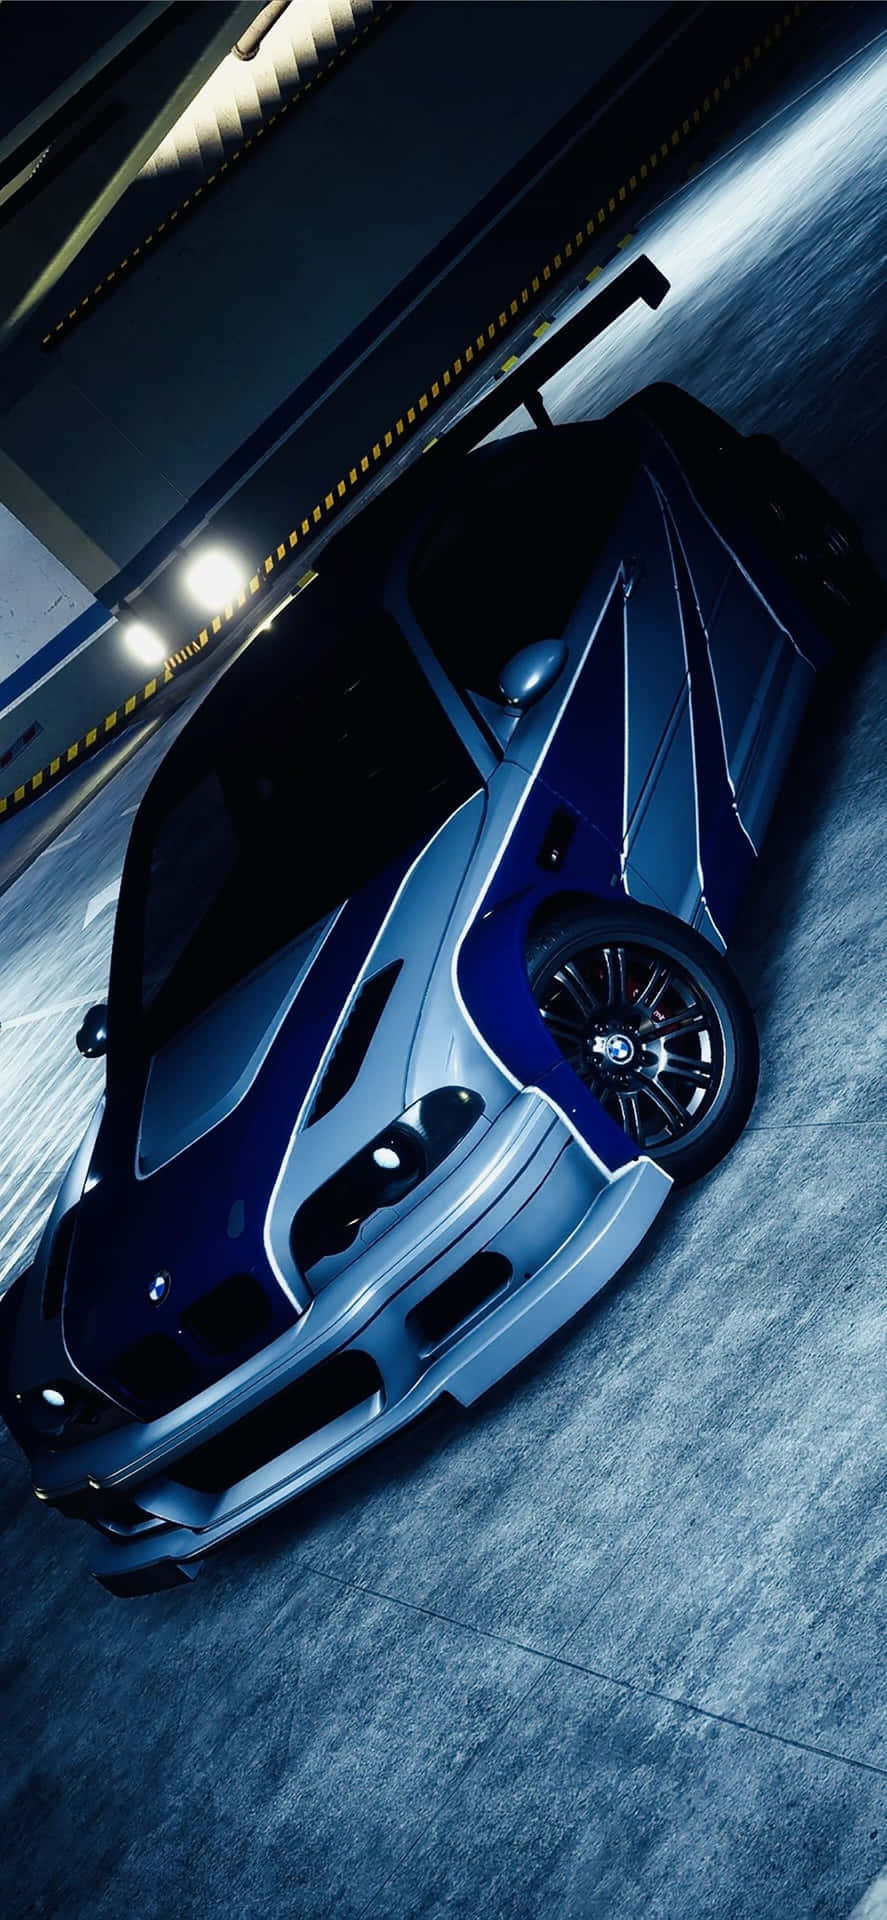 A Blue And White Car In A Dark Garage